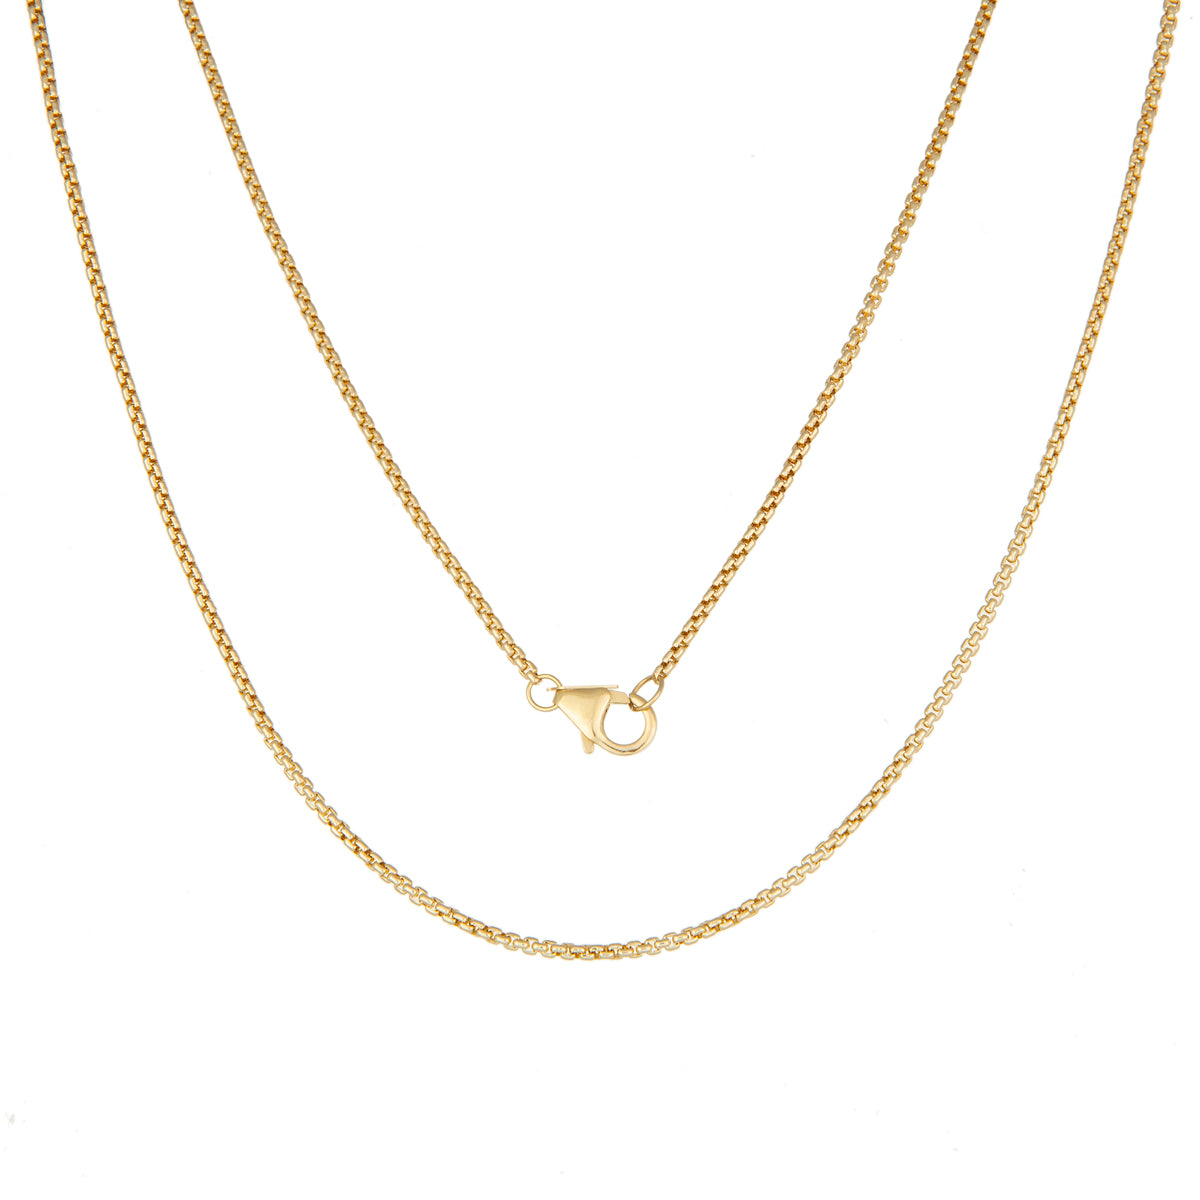 Gold Veneziana Chain Necklace